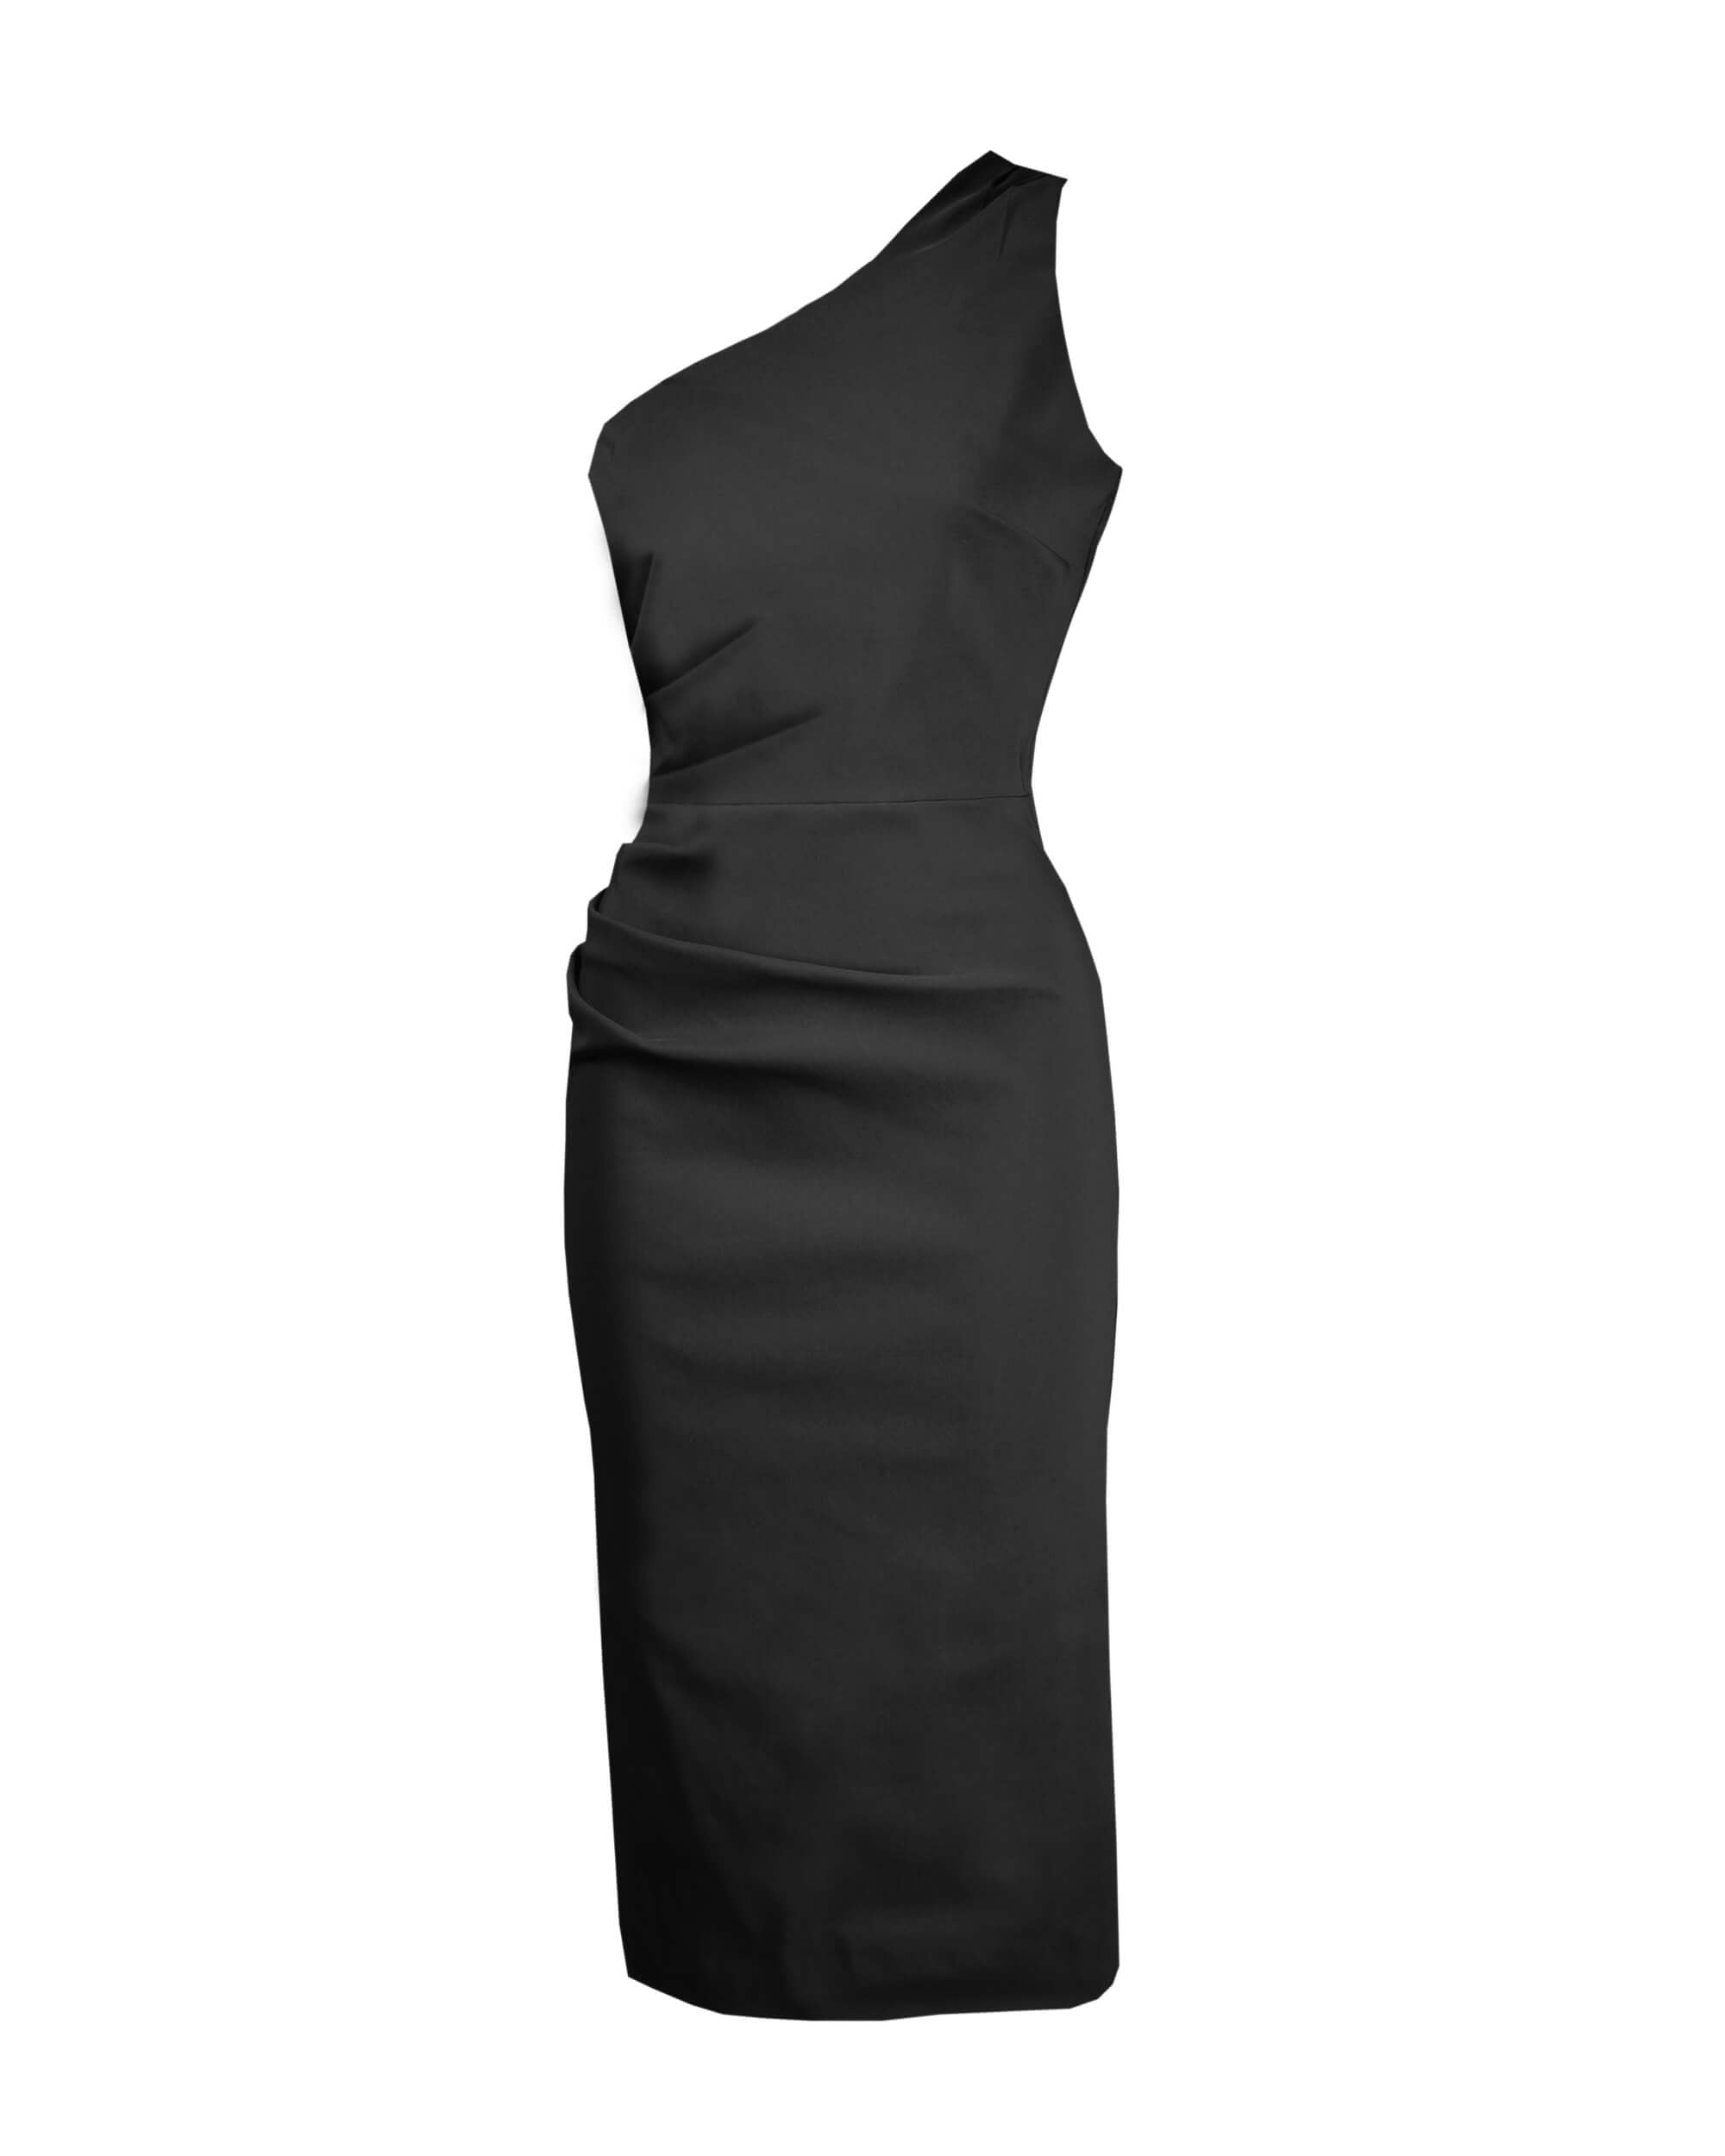 Norma Wiggle Dress in Black